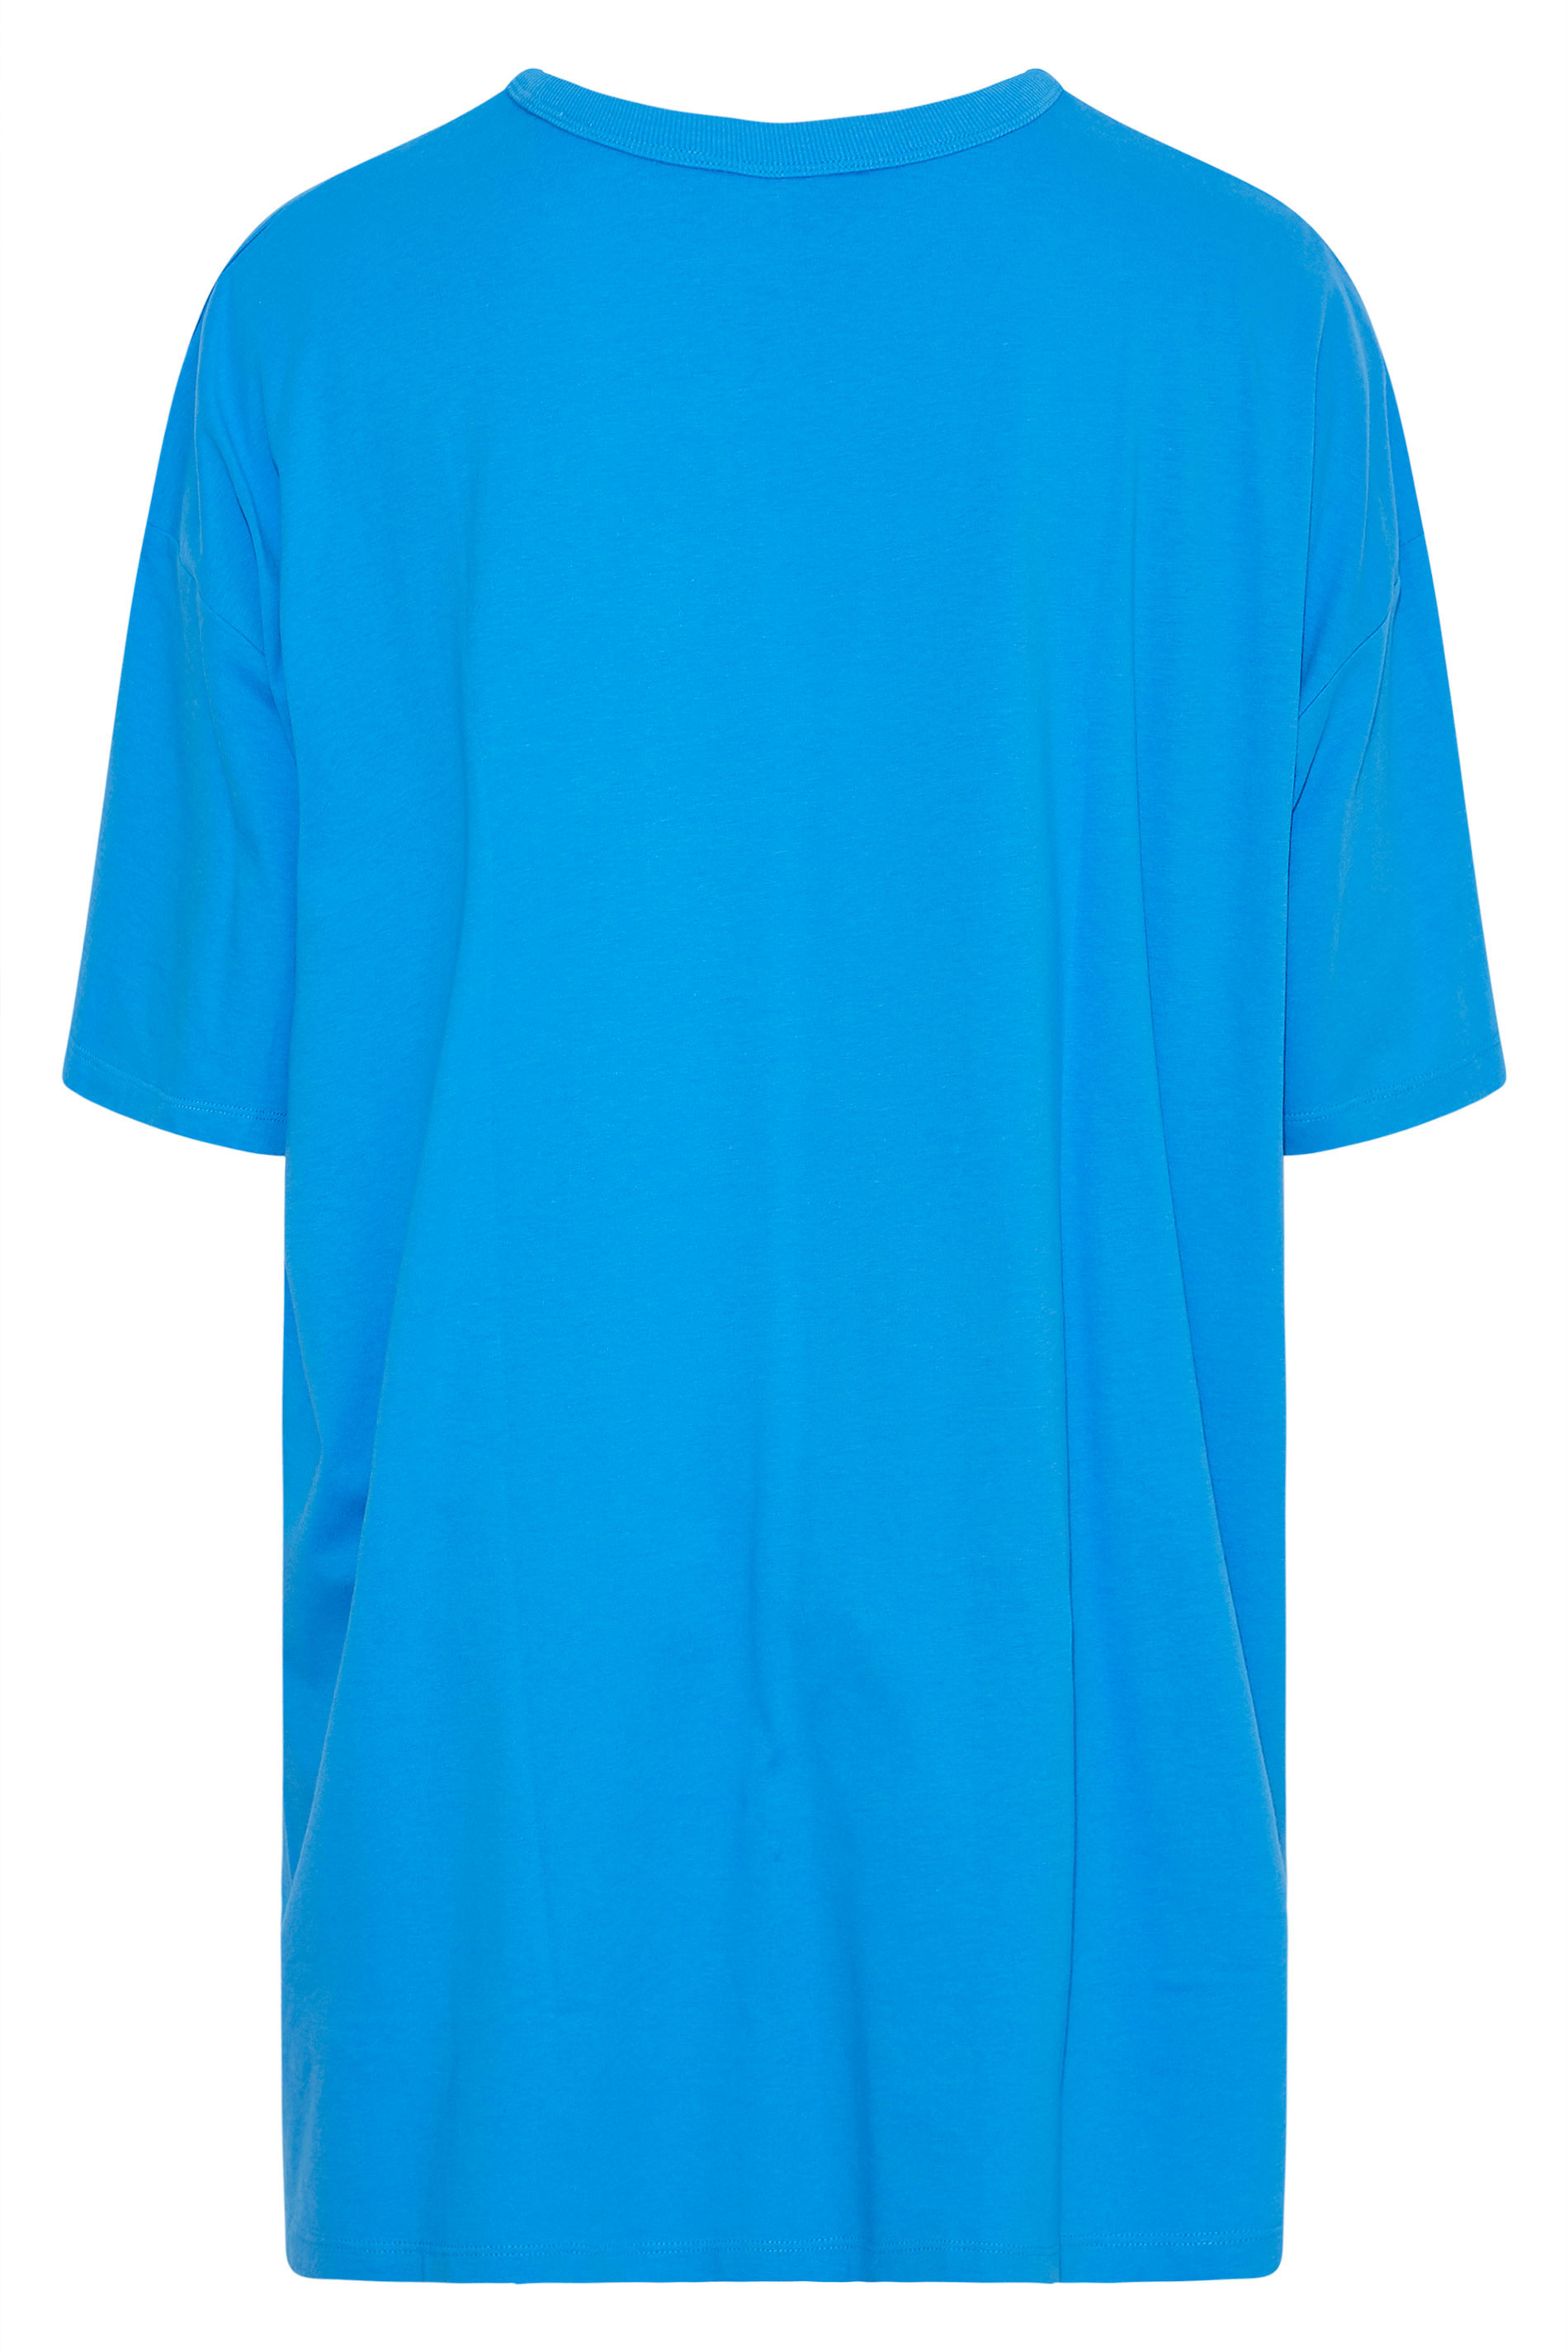 Grande taille  Tops Grande taille  T-Shirts | T-Shirt Bleu en Jersey Design Oversize - YZ56049